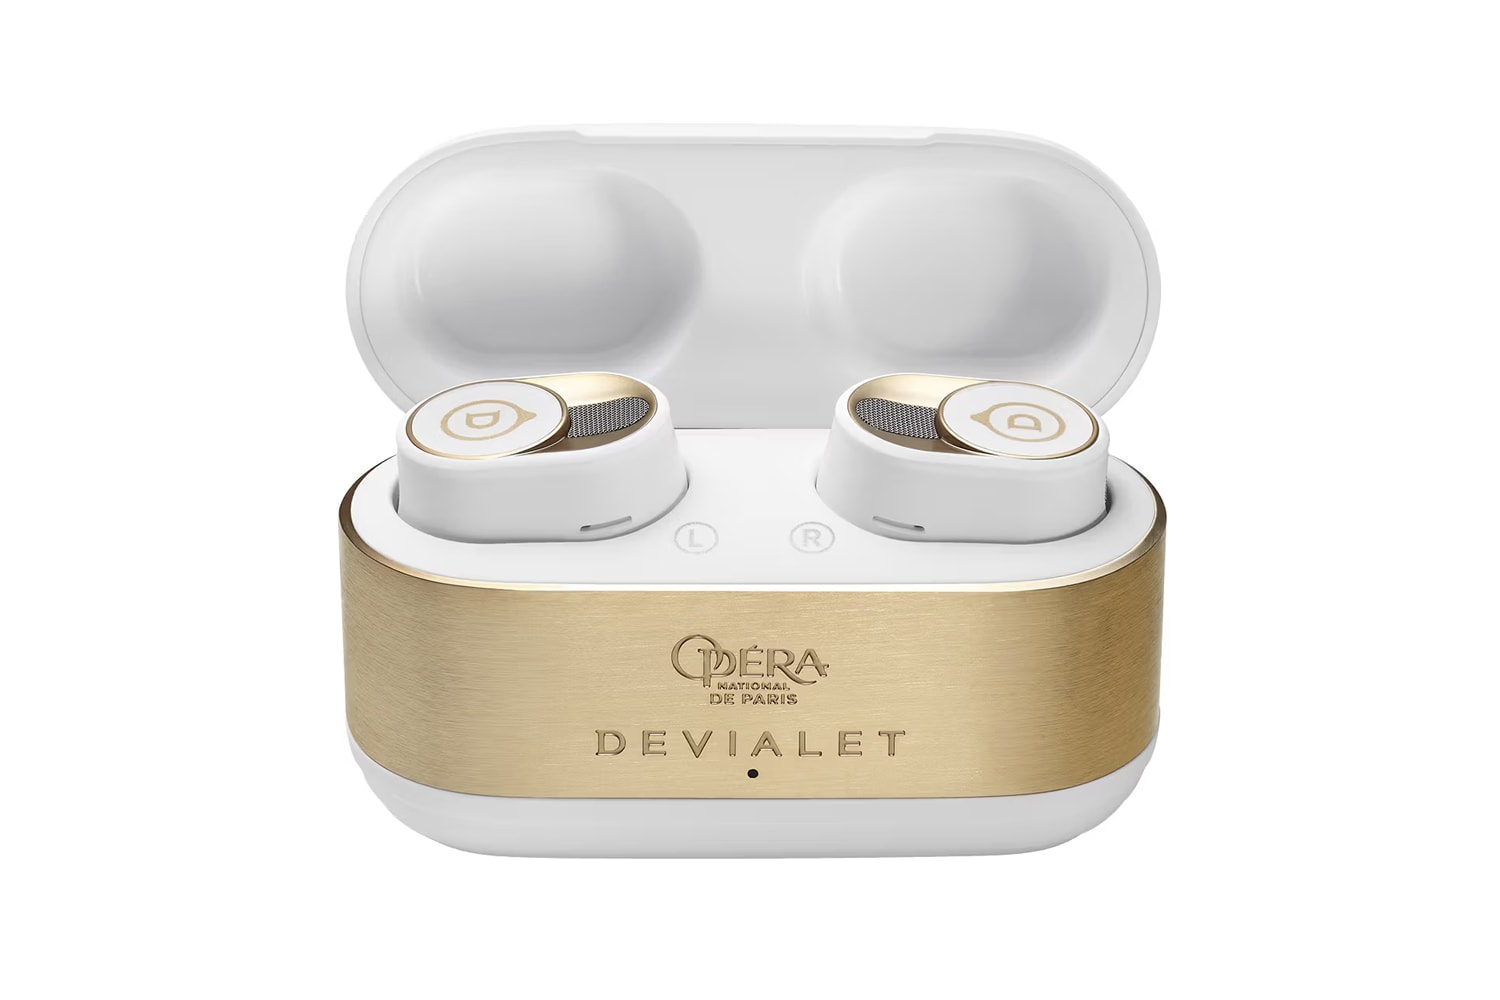 DEVIALET 正式推出全新 GEMINI II 真無線降噪耳機